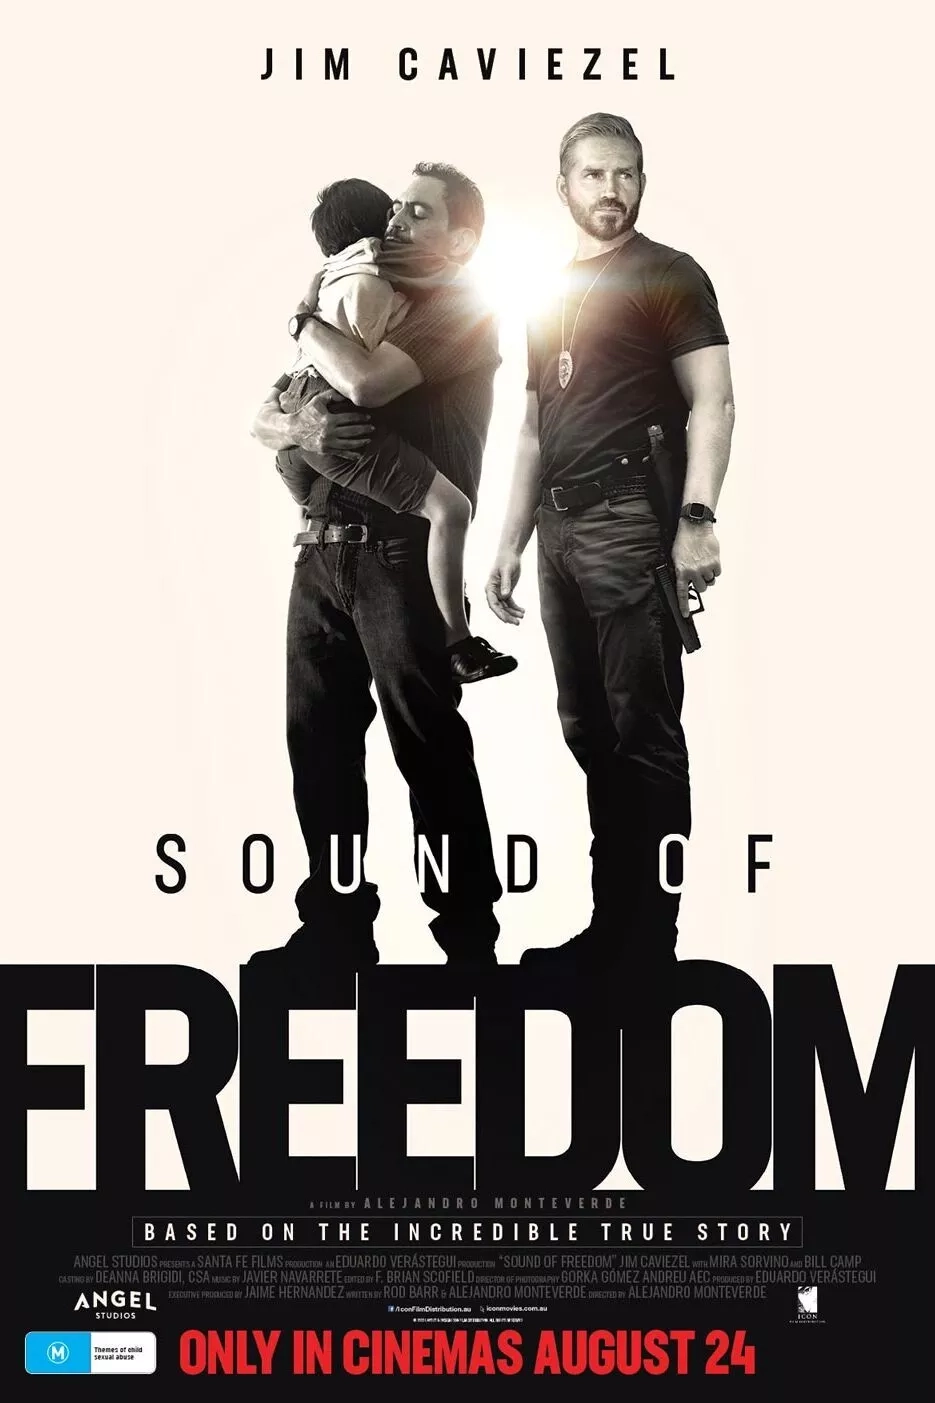 Sound Of Freedom Image 1